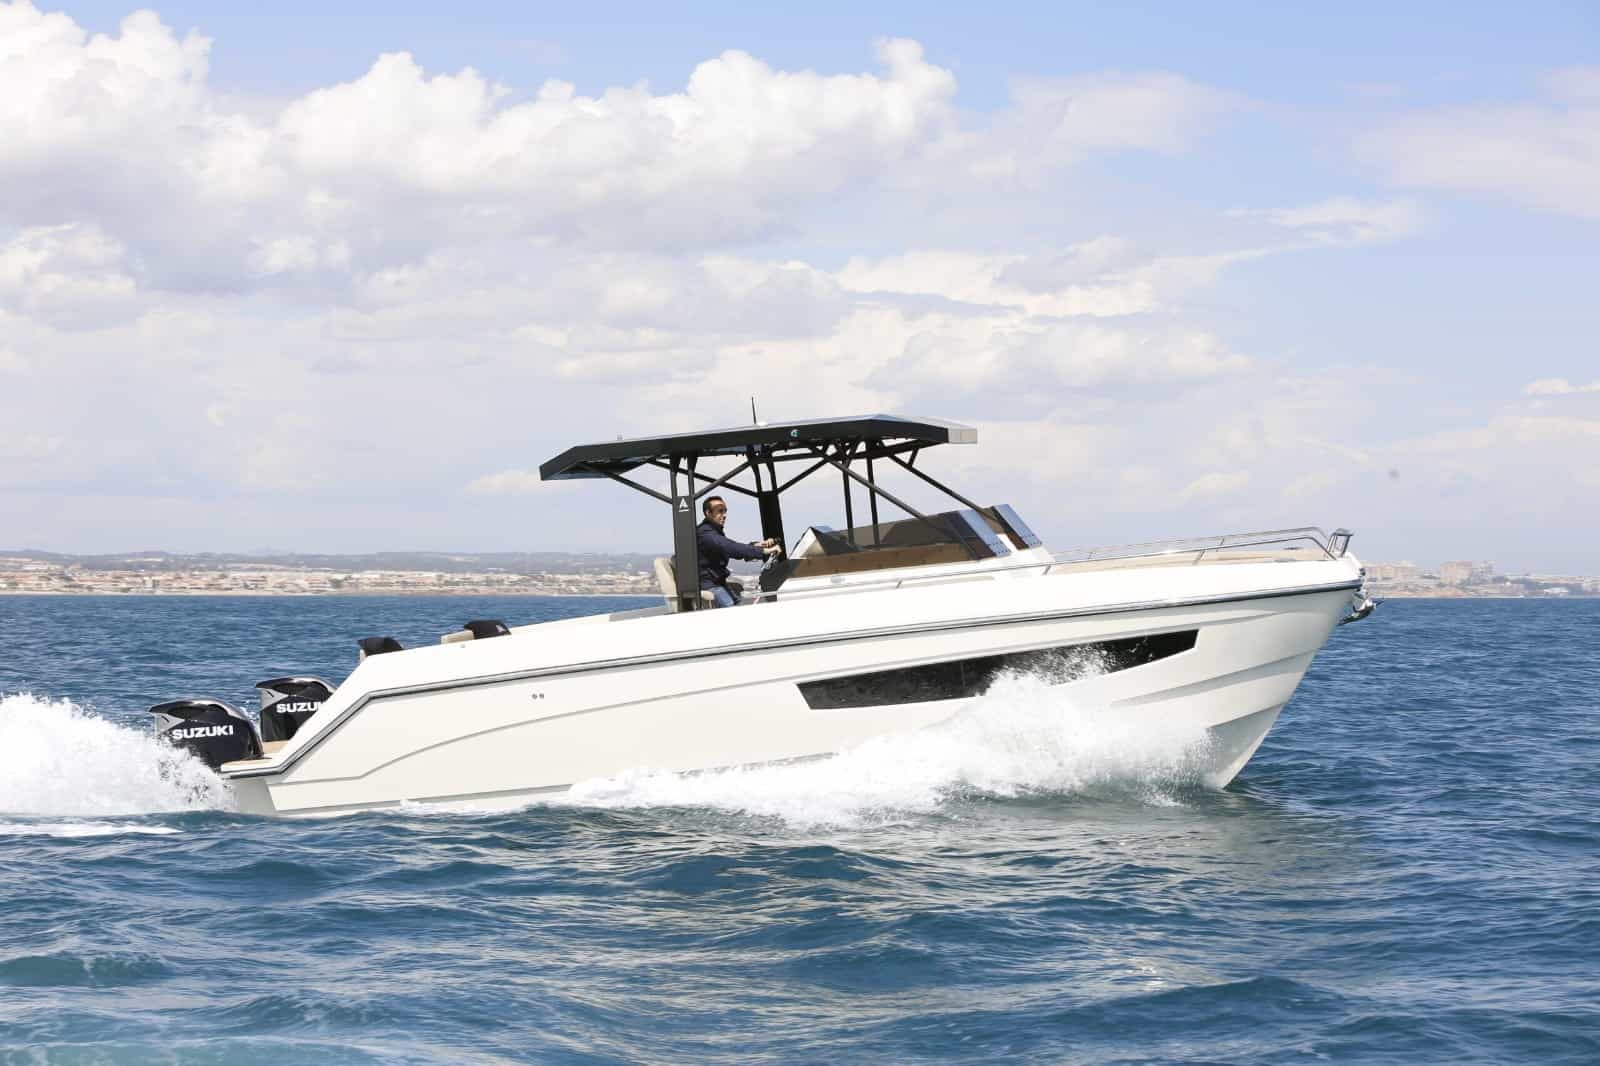 Comprar Barco Astilux Buy Boat Astilux Dénia Javea Altea Alicante